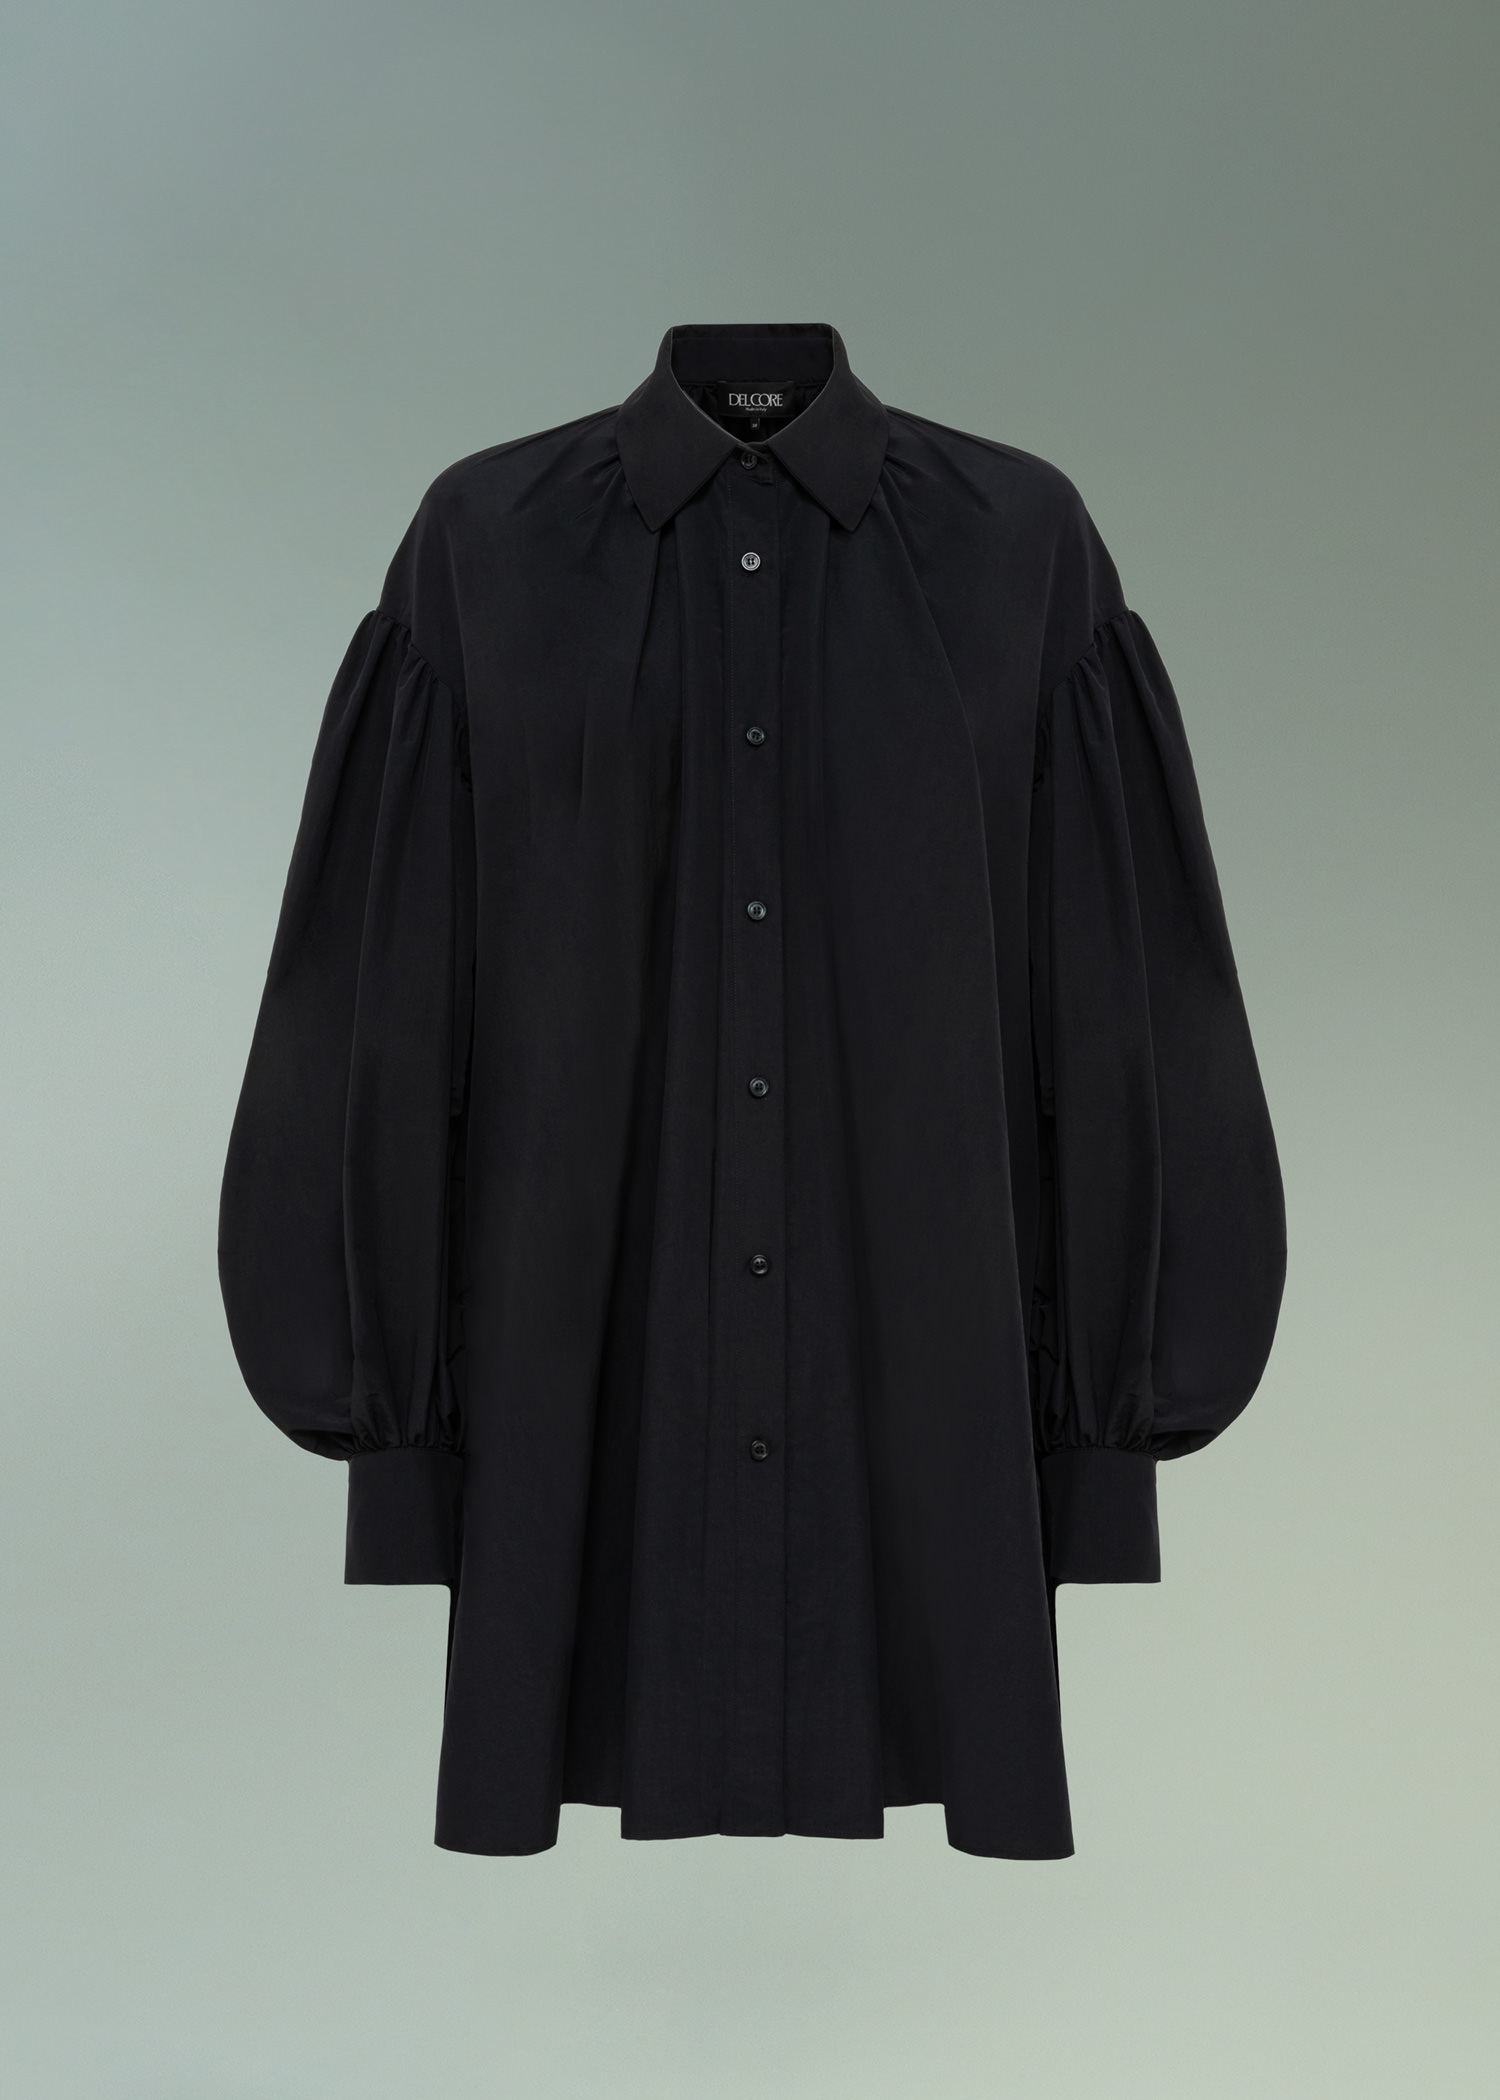 DEL CORE: BALLOON SLEEVE SHIRT DRESS WITH DRAWSTRING WAIST